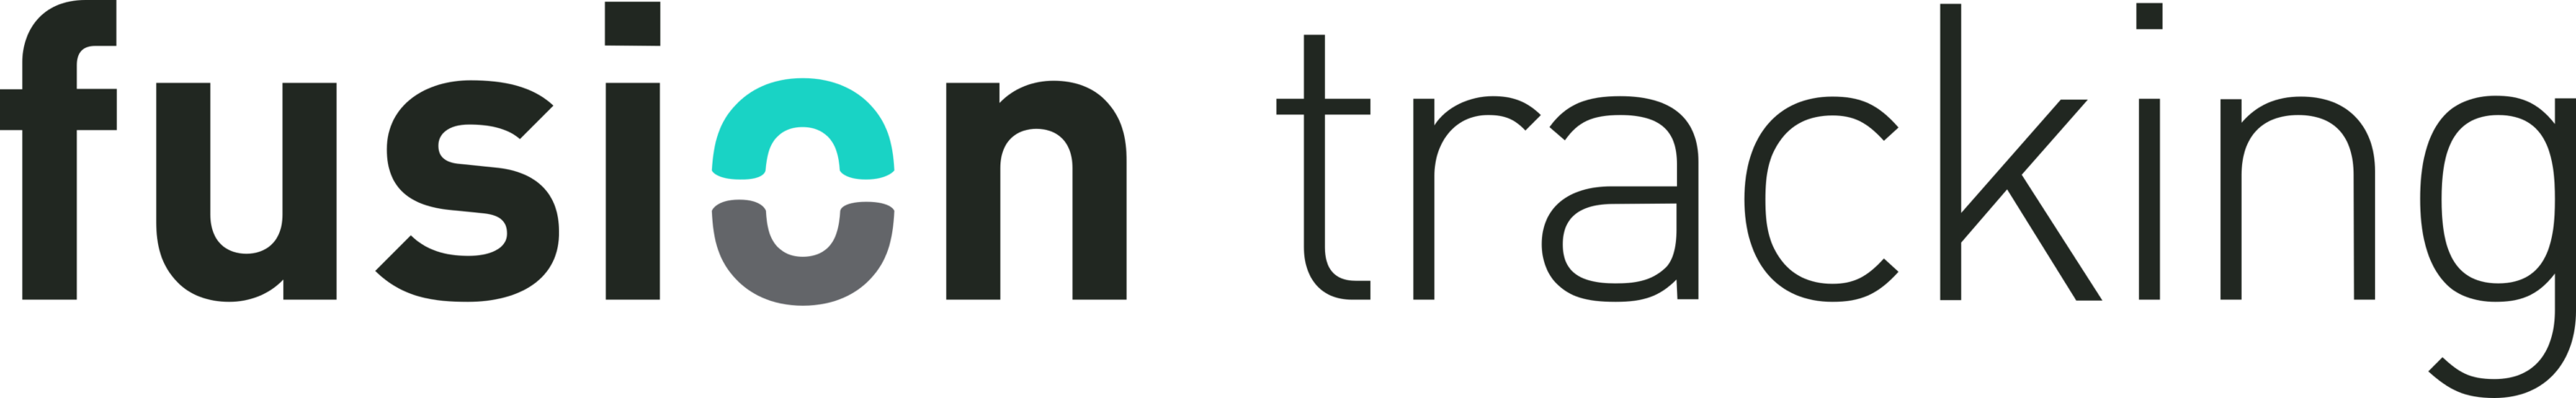 Fusion Tracking Technology Logo